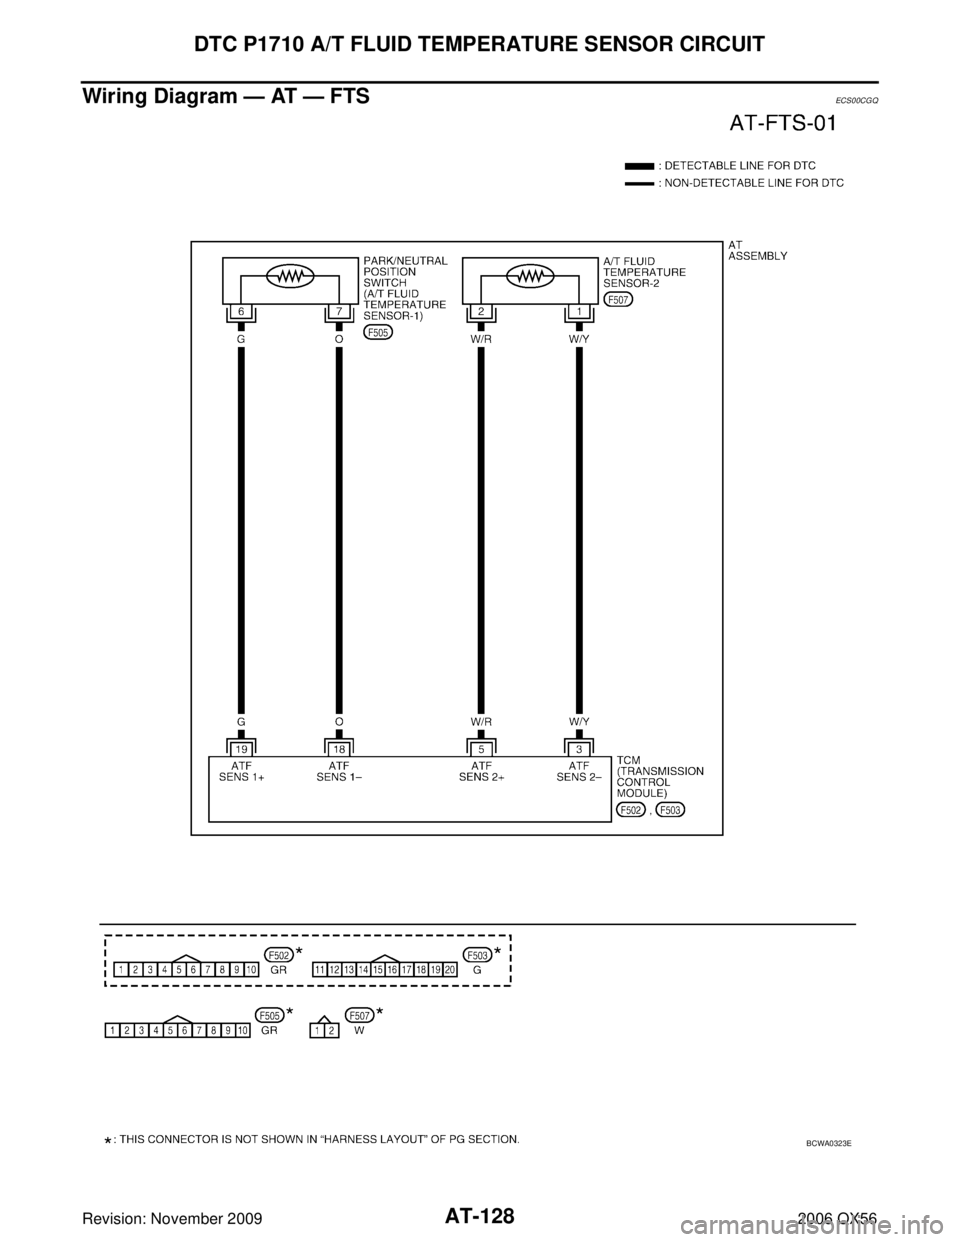 INFINITI QX56 2006  Factory User Guide AT-128
DTC P1710 A/T FLUID TEMPERATURE SENSOR CIRCUIT
Revision: November 20092006 QX56
Wiring Diagram — AT — FTSECS00CGQ
BCWA0323E 